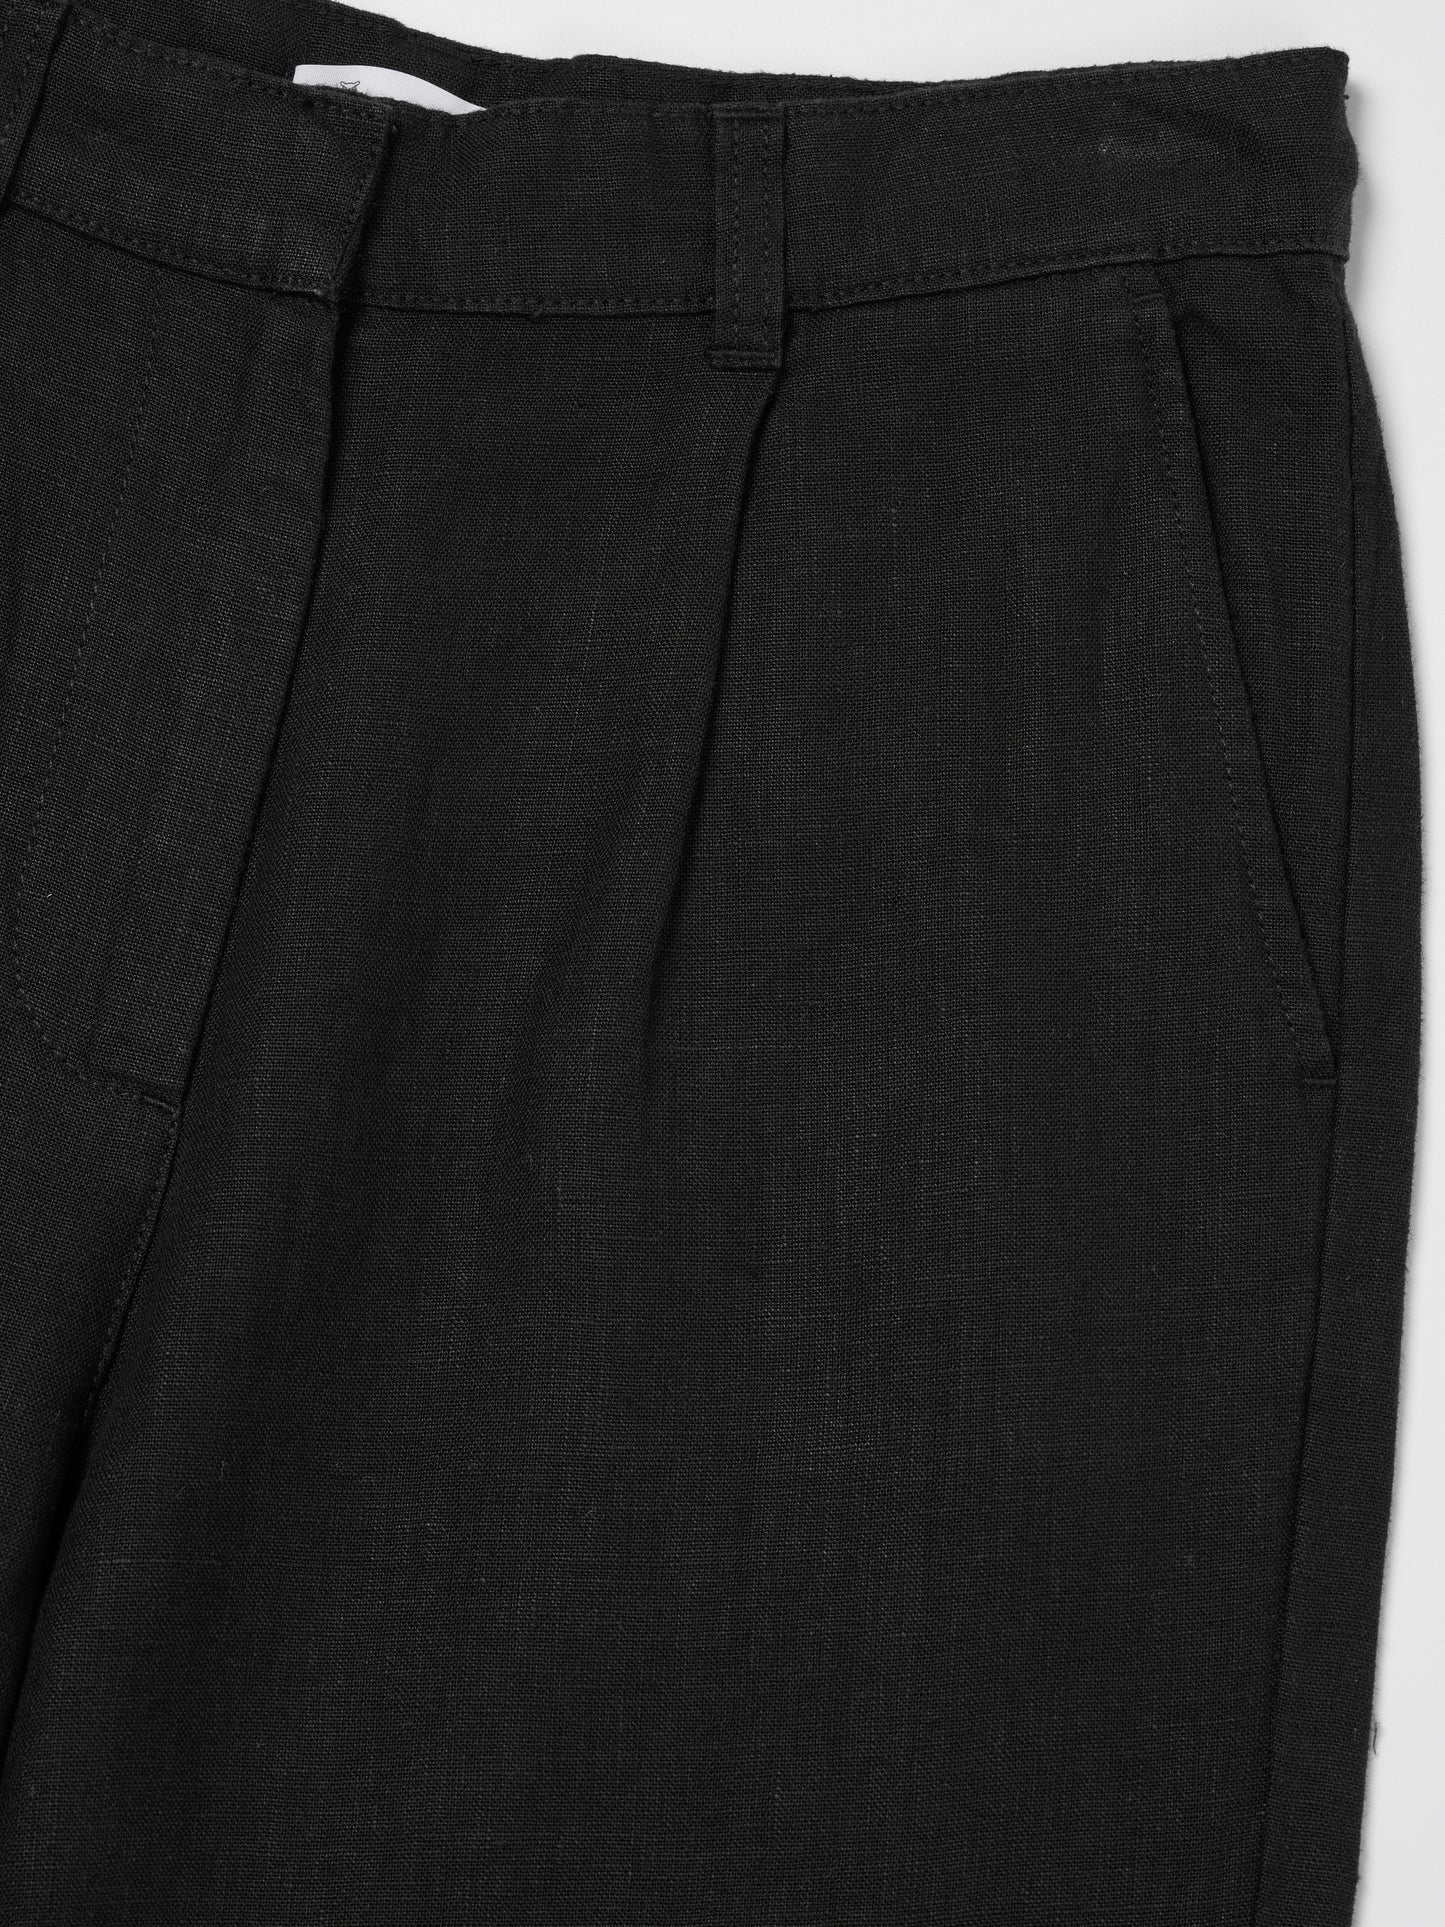 KCA - POSEY wide mid-rise linen pants Black Jet